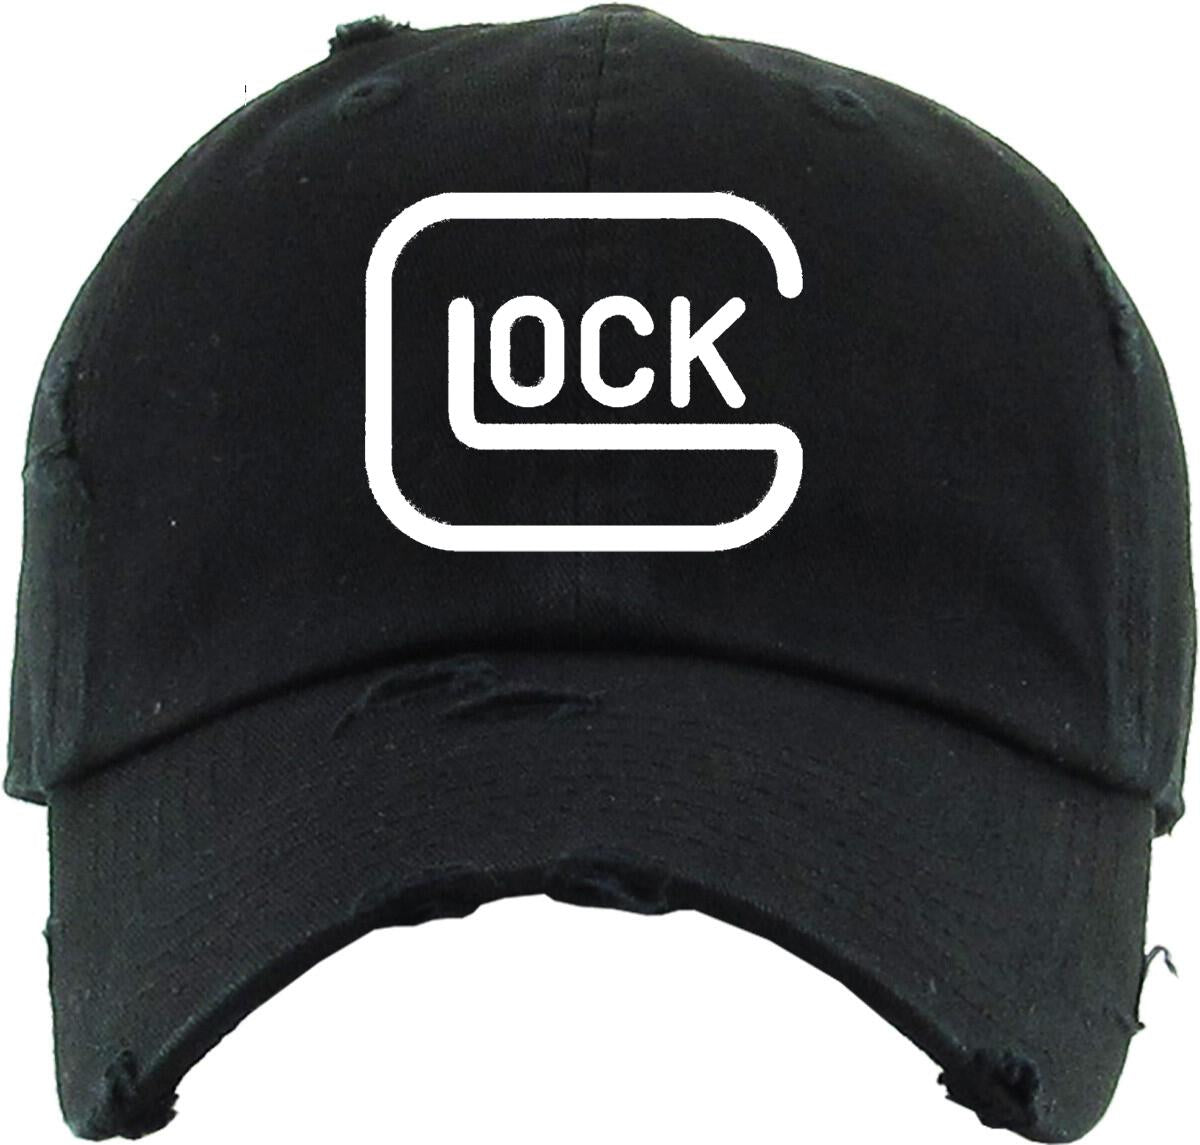 Point Blank - Glock Dad Hat (Black)